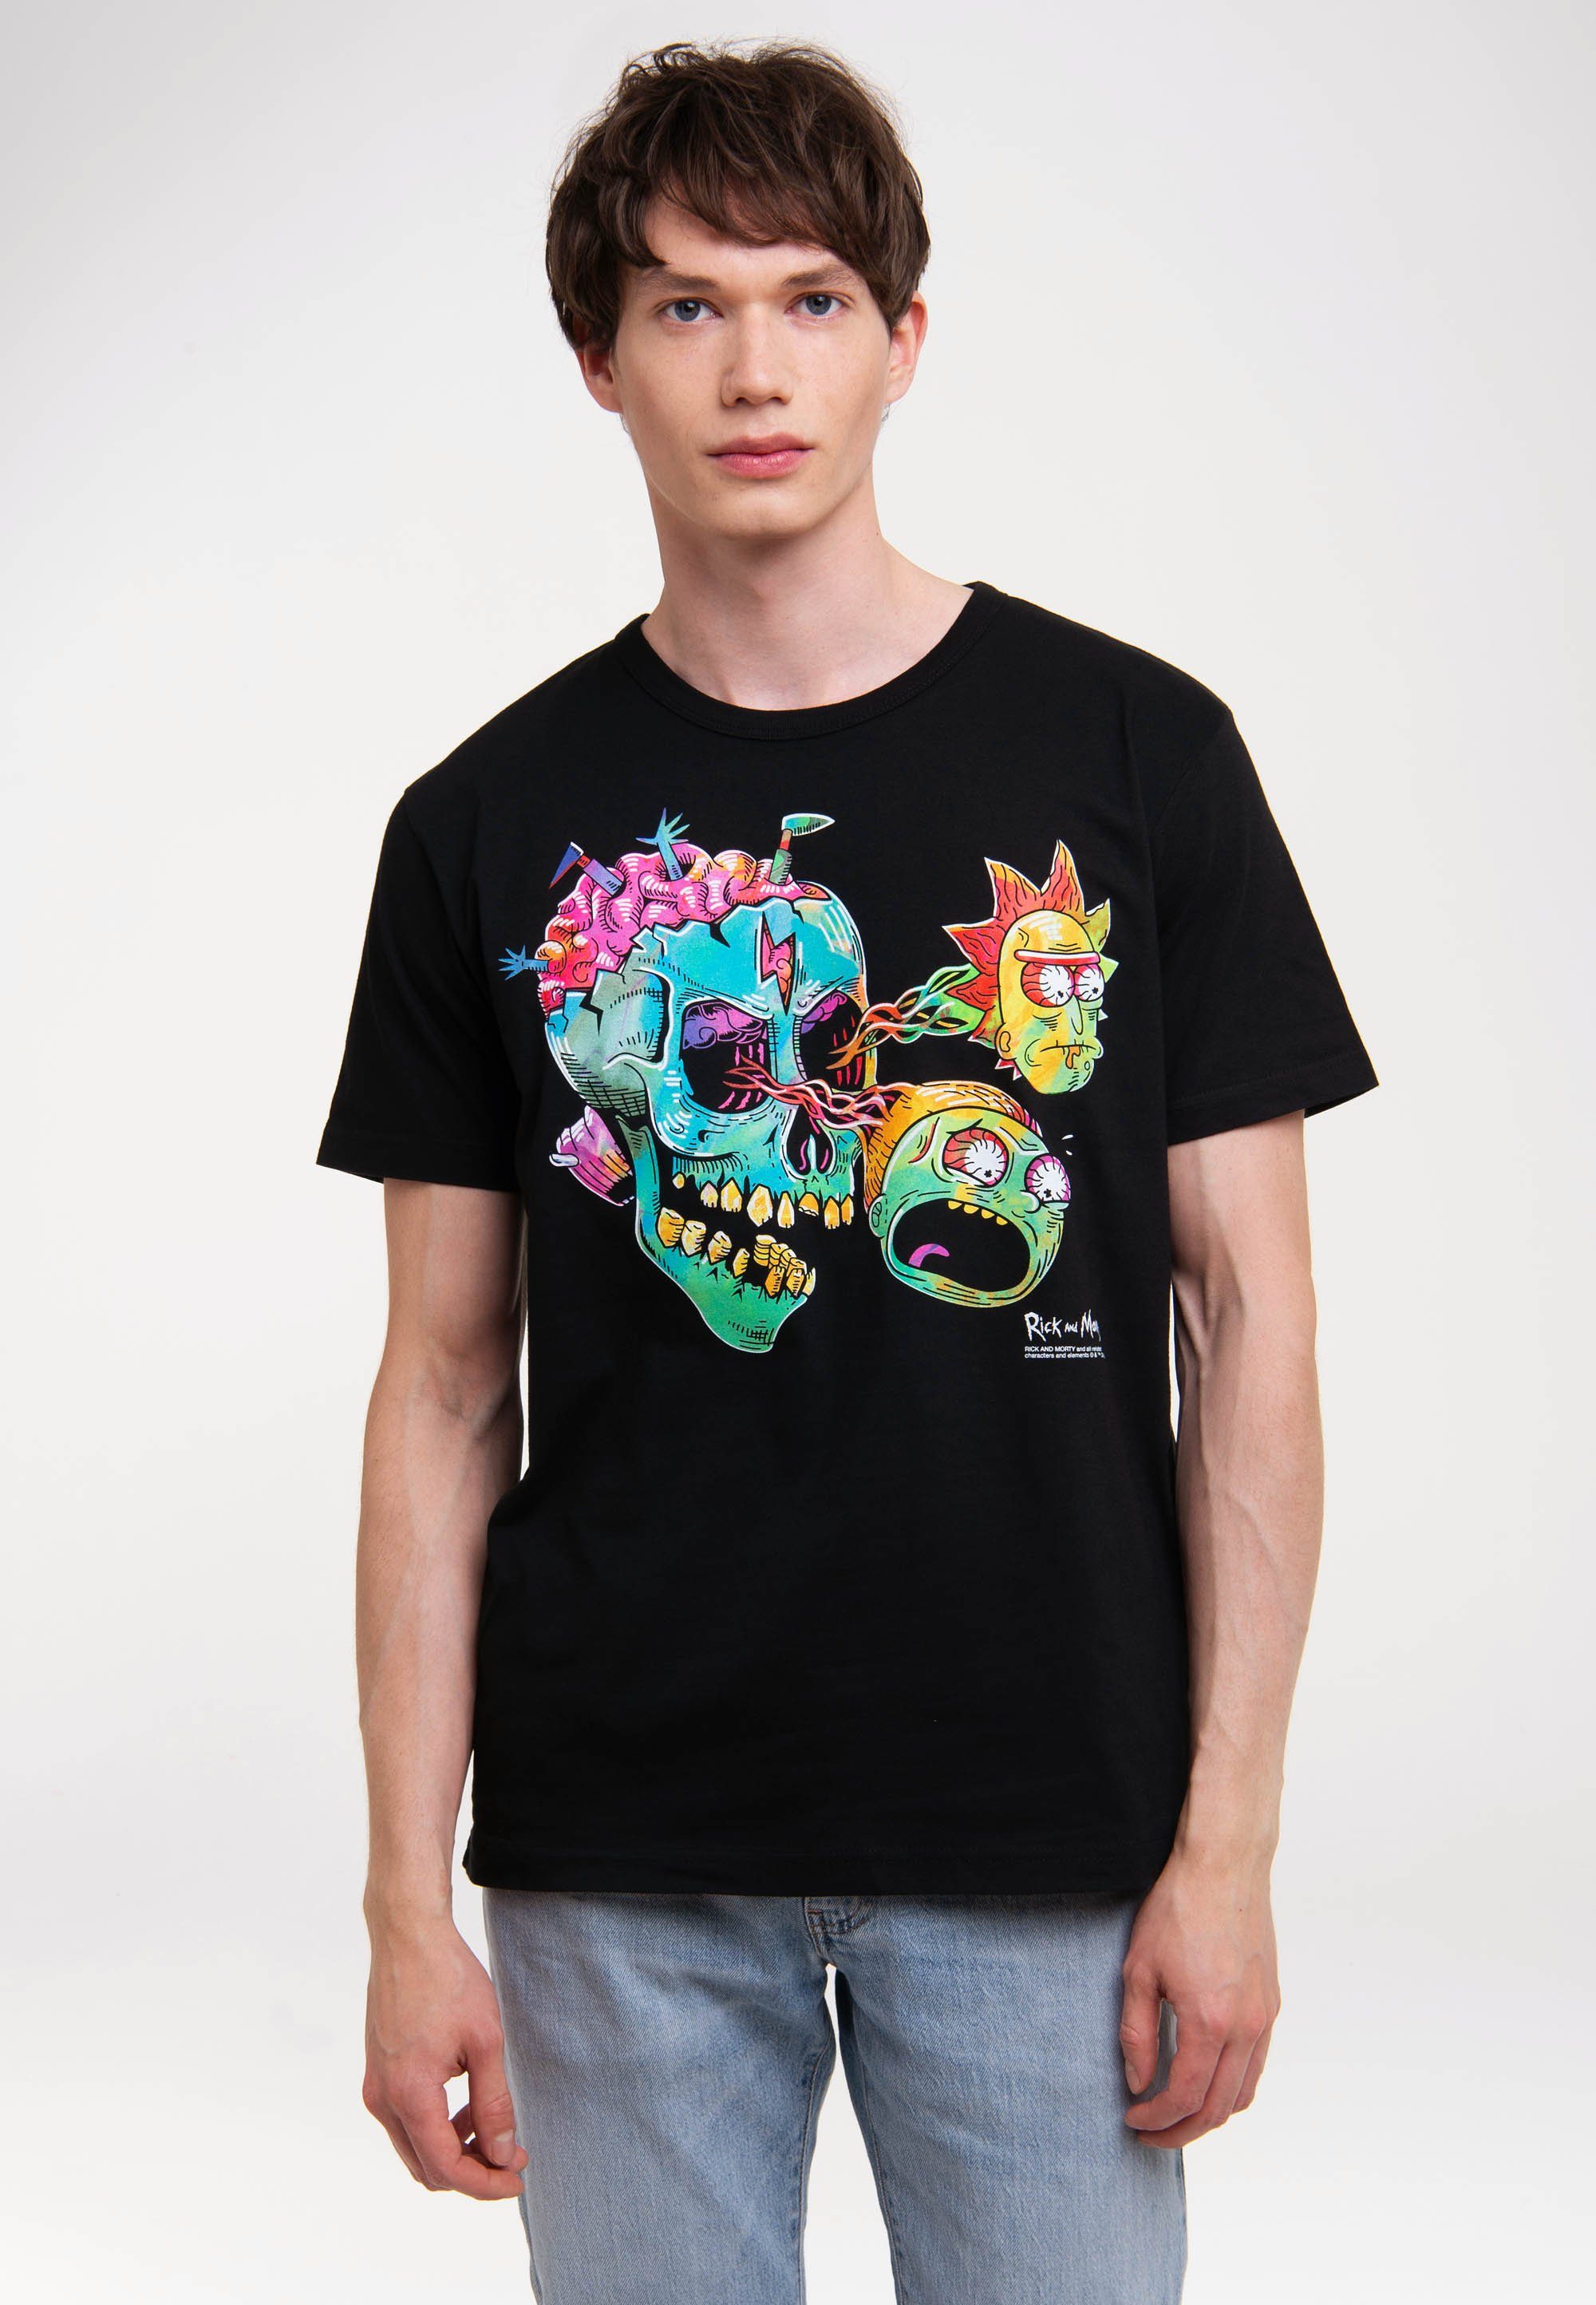 [Vertrauen zuerst, Qualität zuerst] LOGOSHIRT T-Shirt Rick & Morty - mit Print Skull Eyeball lizenziertem